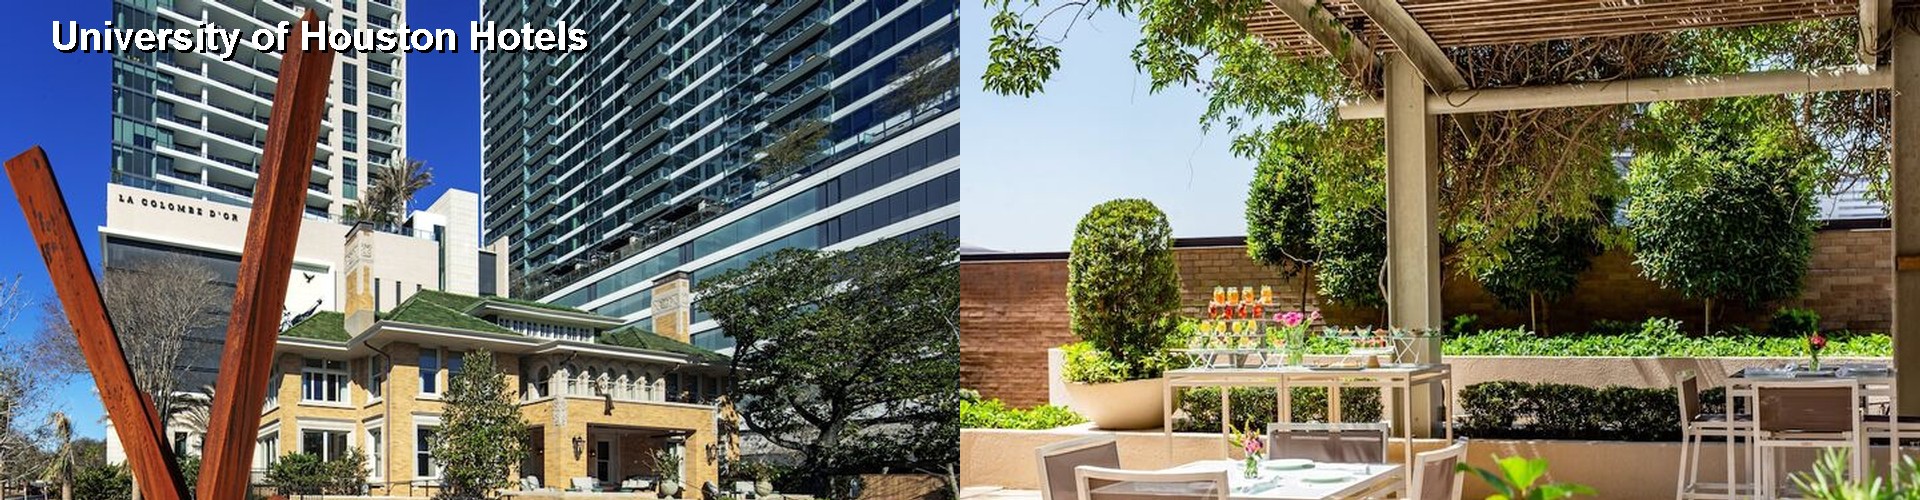 5 Best Hotels near University of Houston